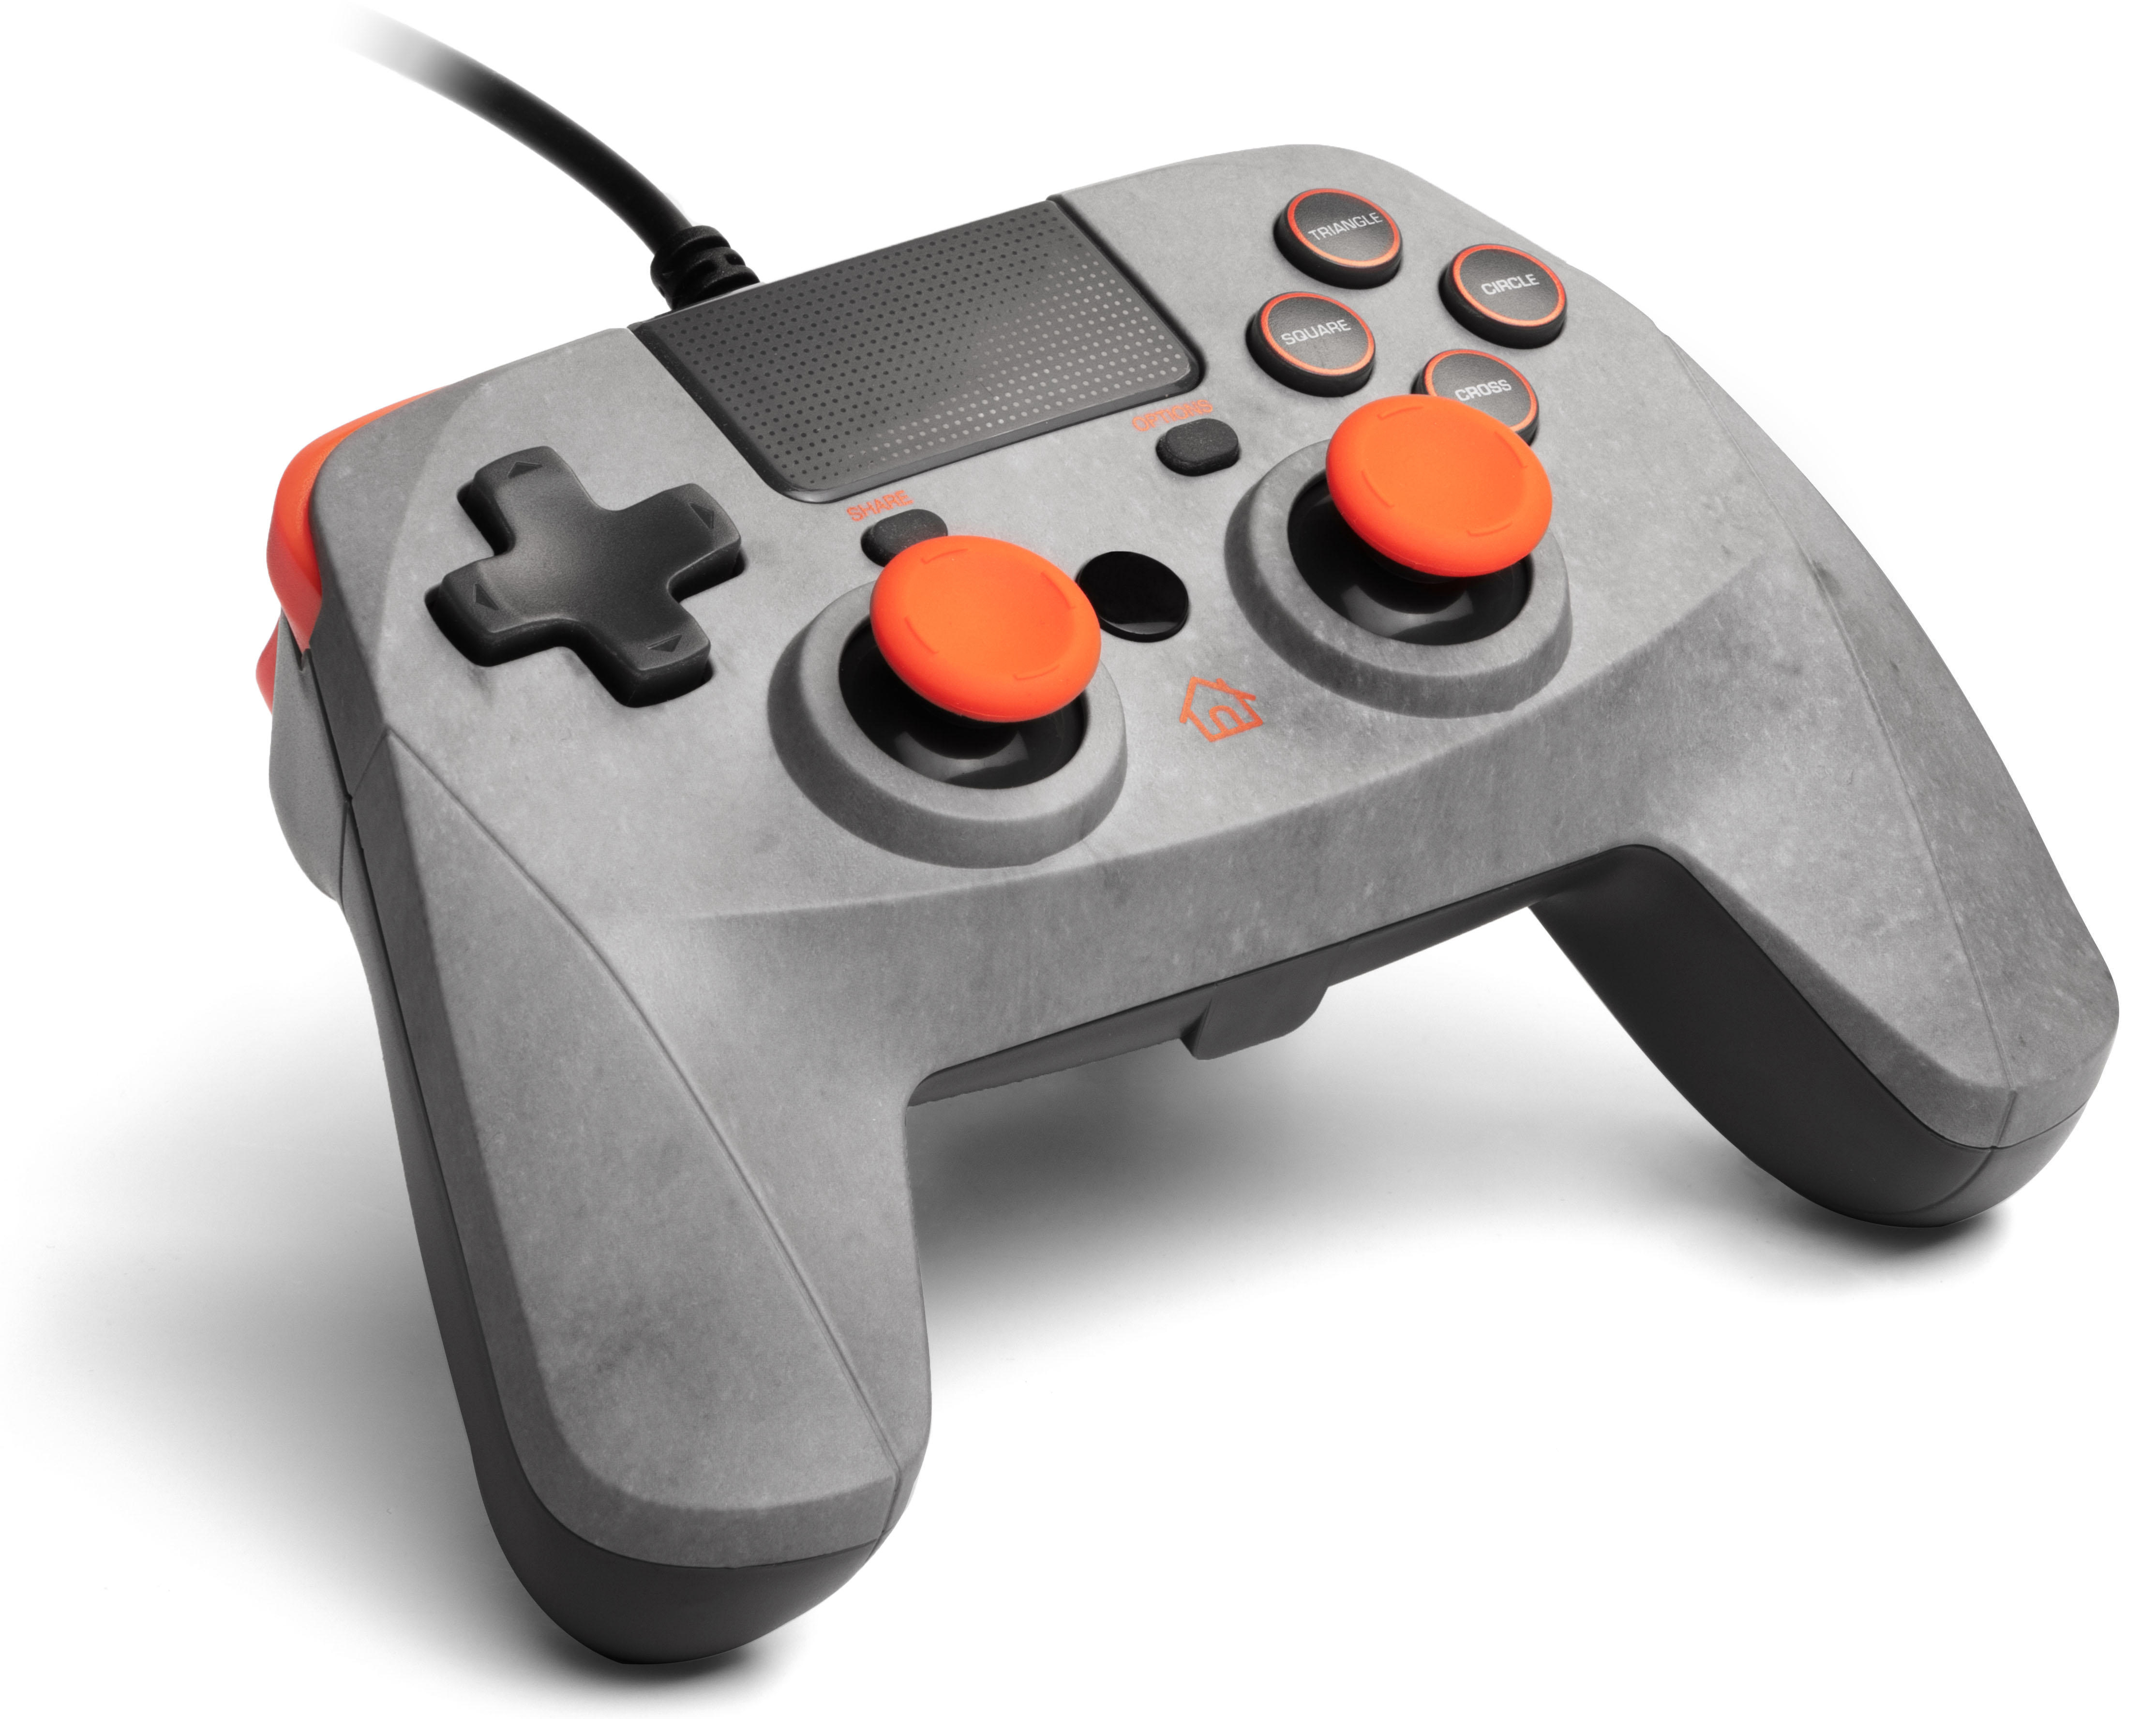 Game:Pad ROCK 4 SNAKEBYTE Grau/Orange 4 für S PlayStation Controller